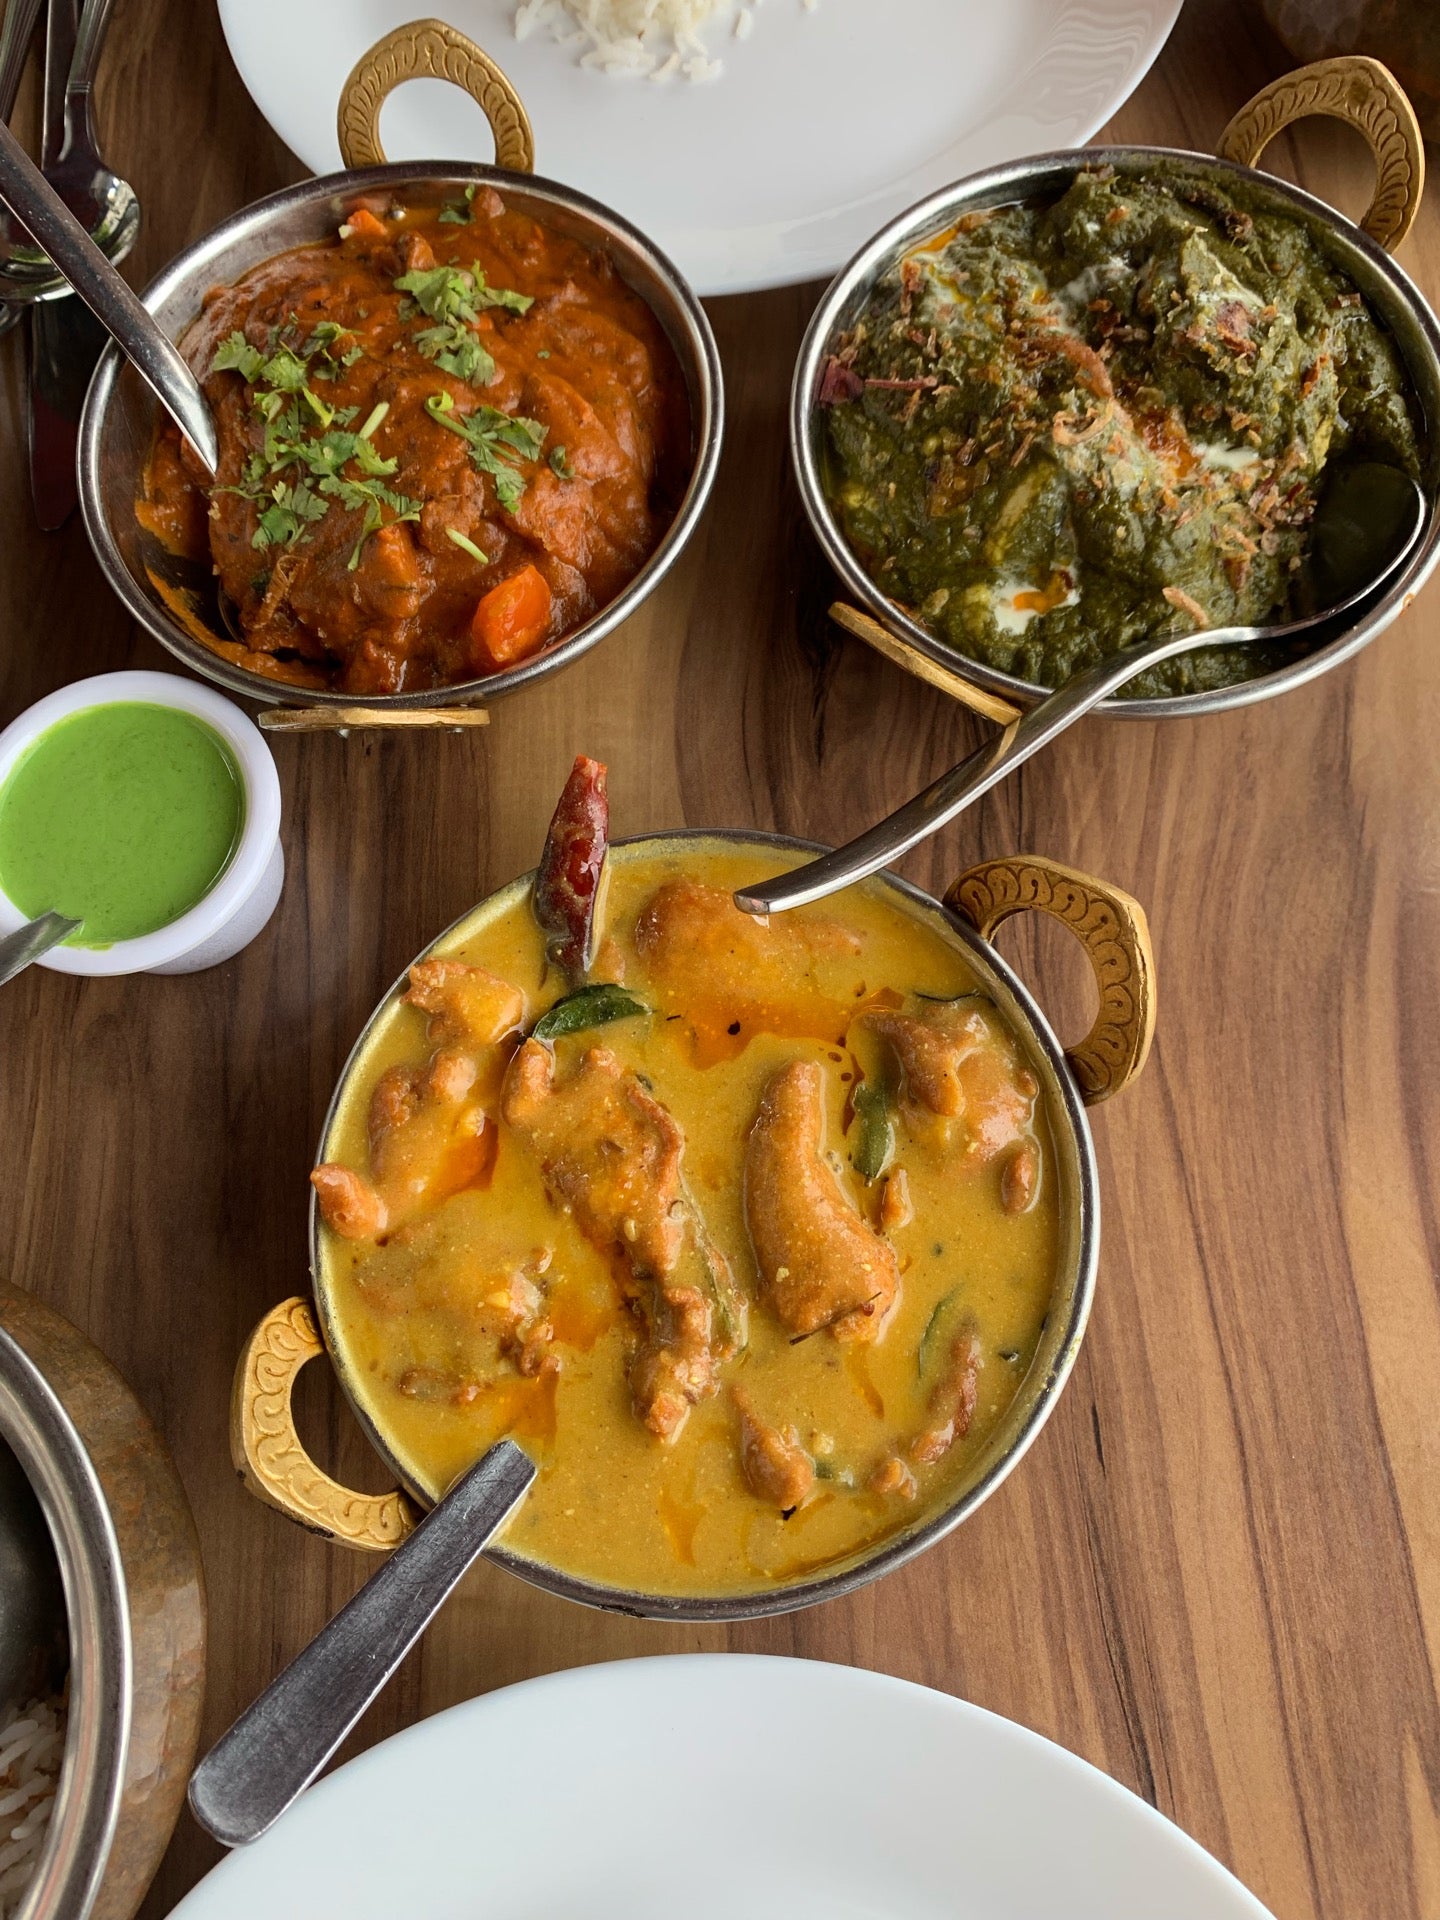 Mirch Masalah - Indian Cuisine by the Riverside